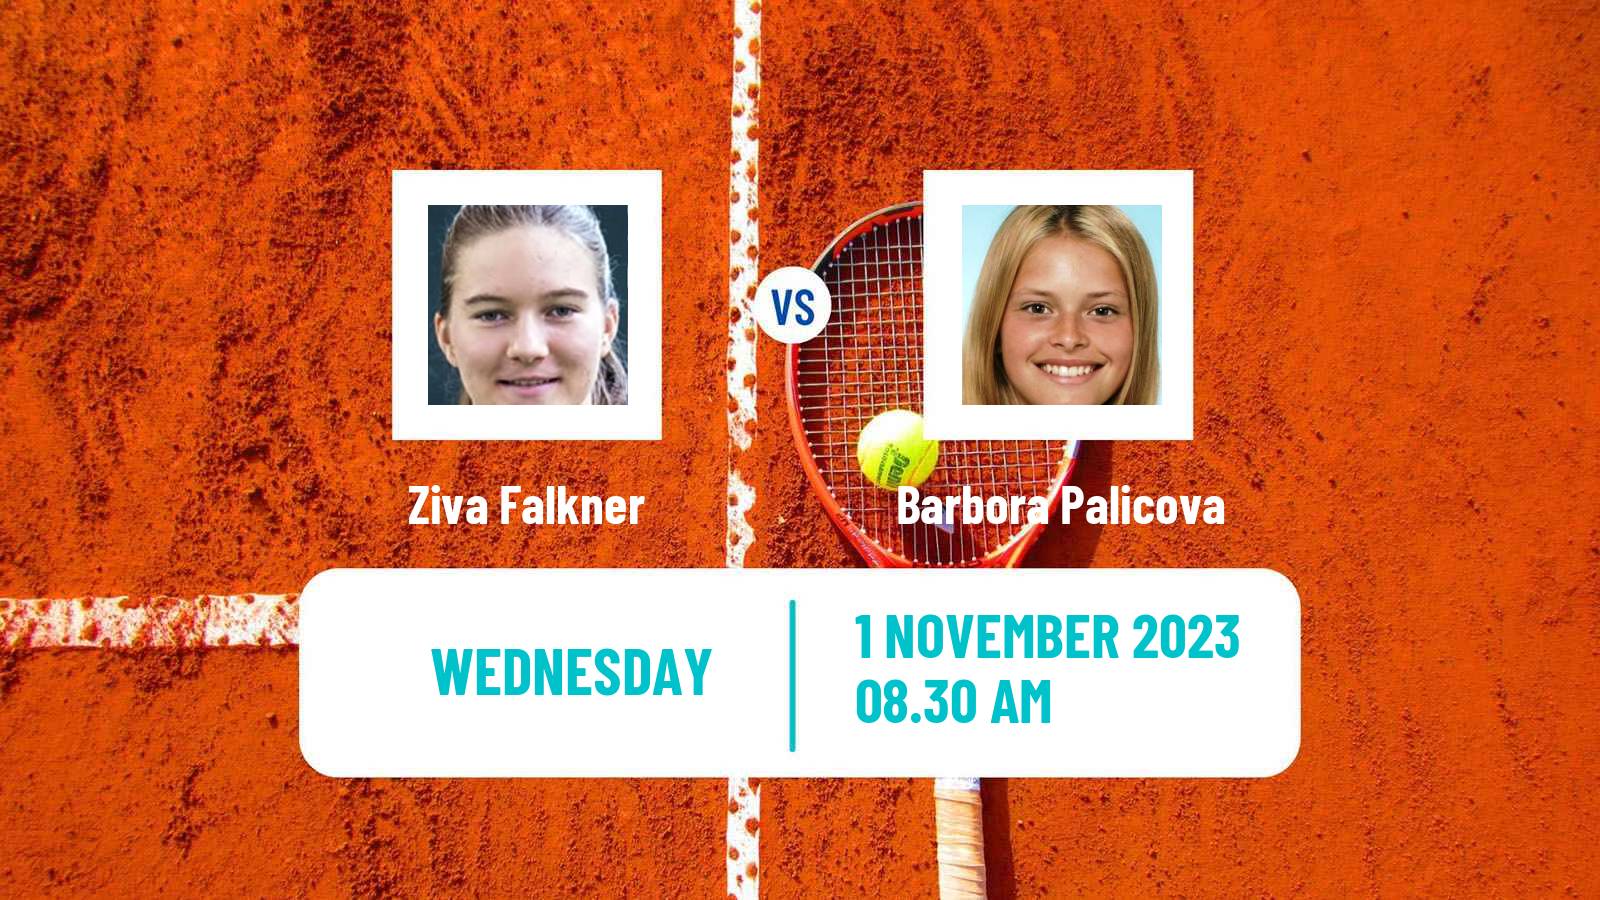 Tennis ITF W25 Sunderland Women Ziva Falkner - Barbora Palicova